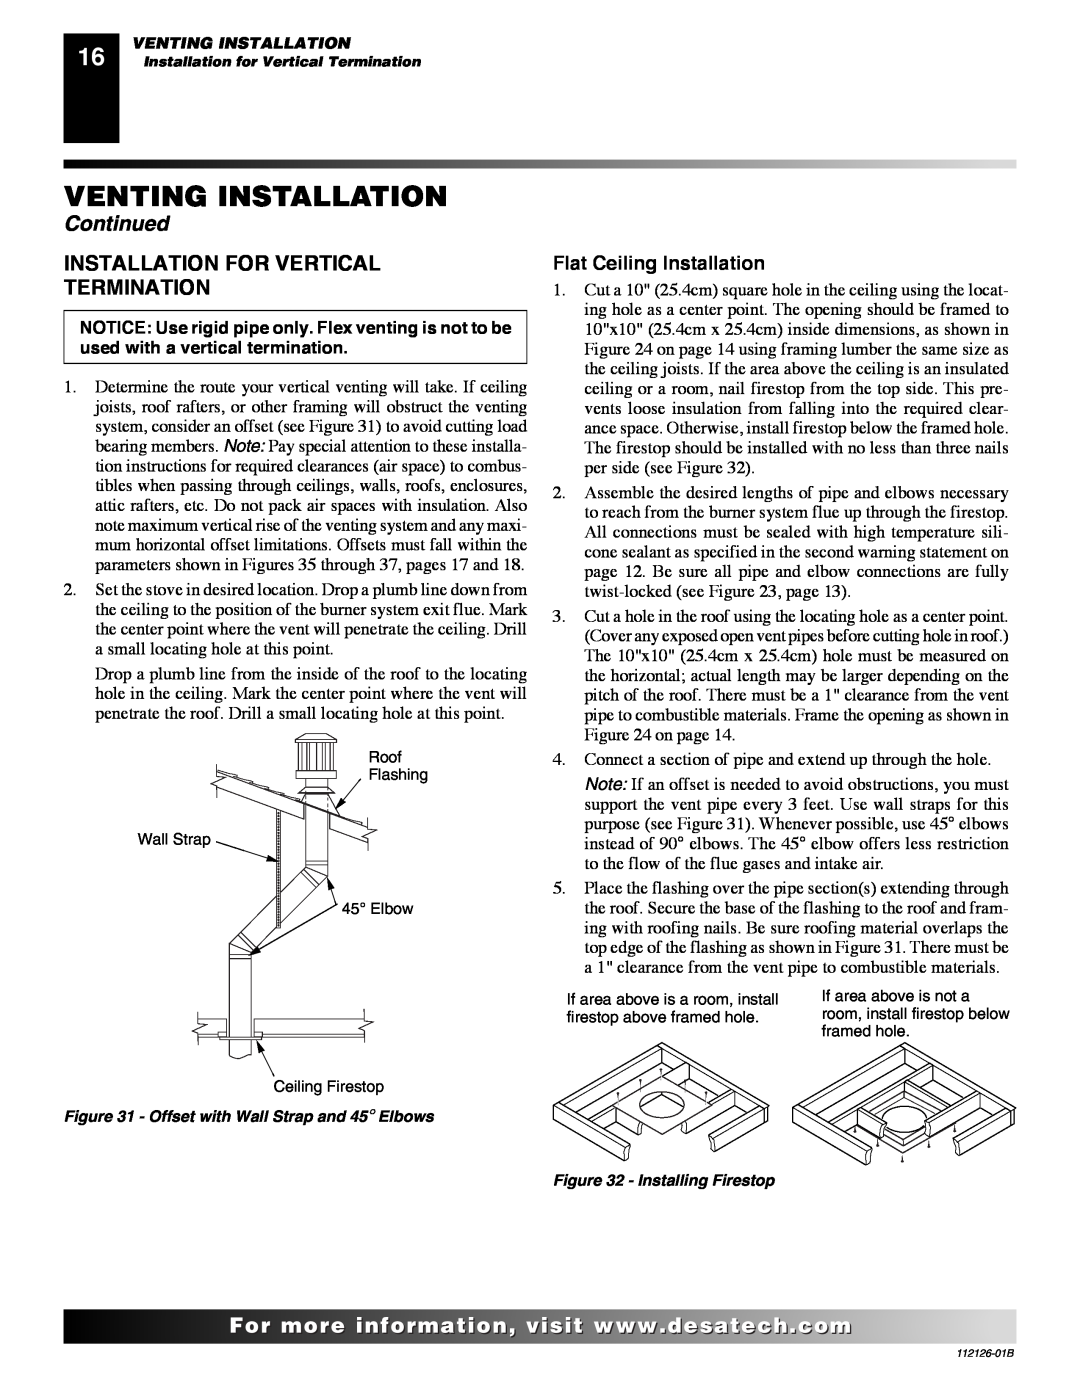 Desa SDVBND, SDVBPD Installation For Vertical Termination, Venting Installation, Continued, Flat Ceiling Installation 